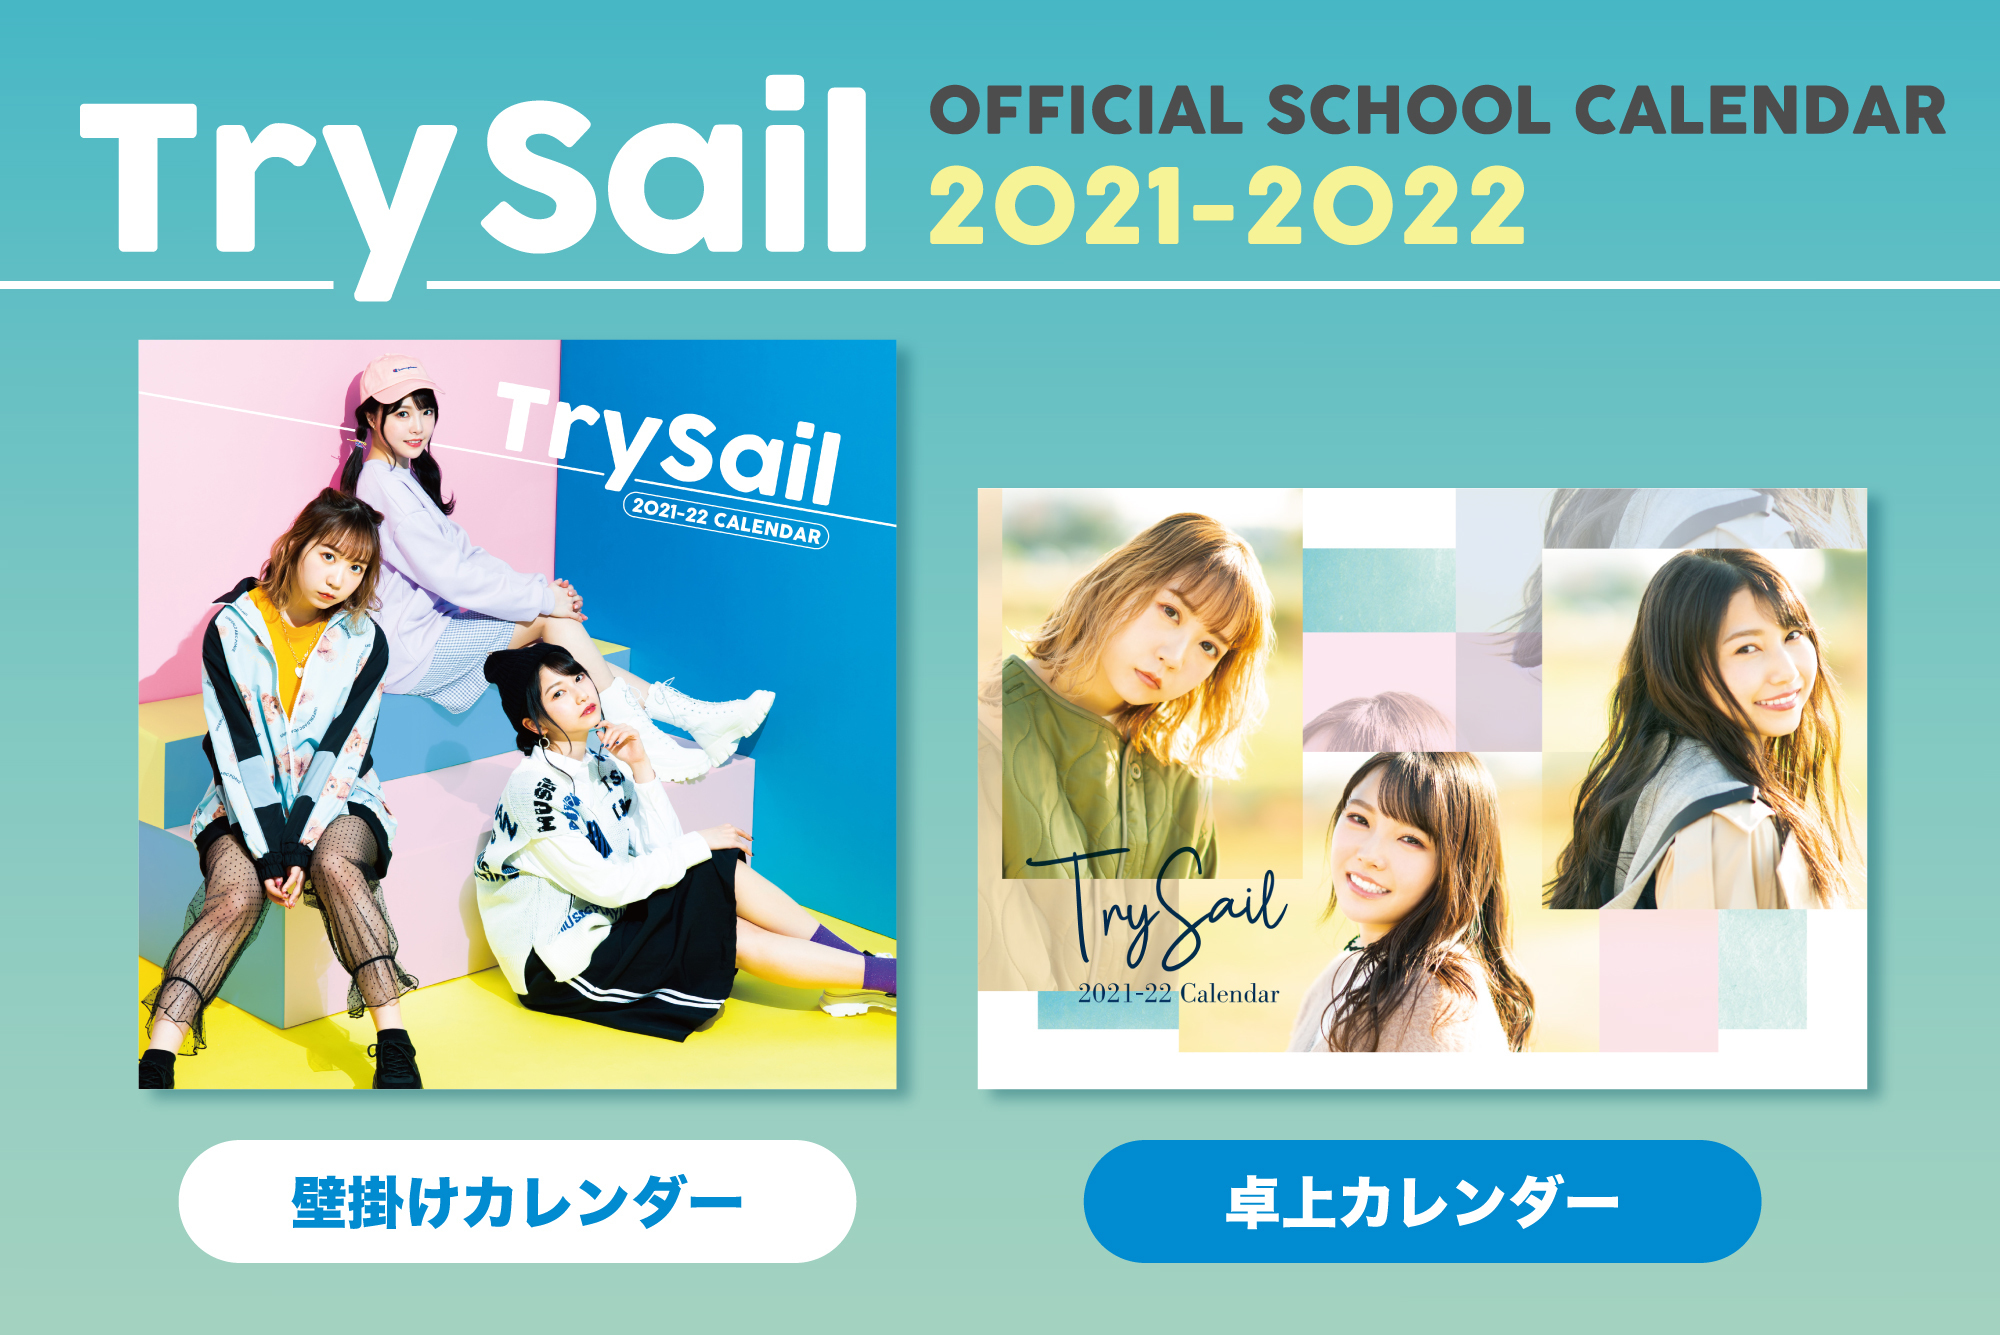 Loppi Hmv限定 Trysail 21年オフィシャルスクールカレンダー発売決定 Trysail Portal Square トライセイルポータルスクエア